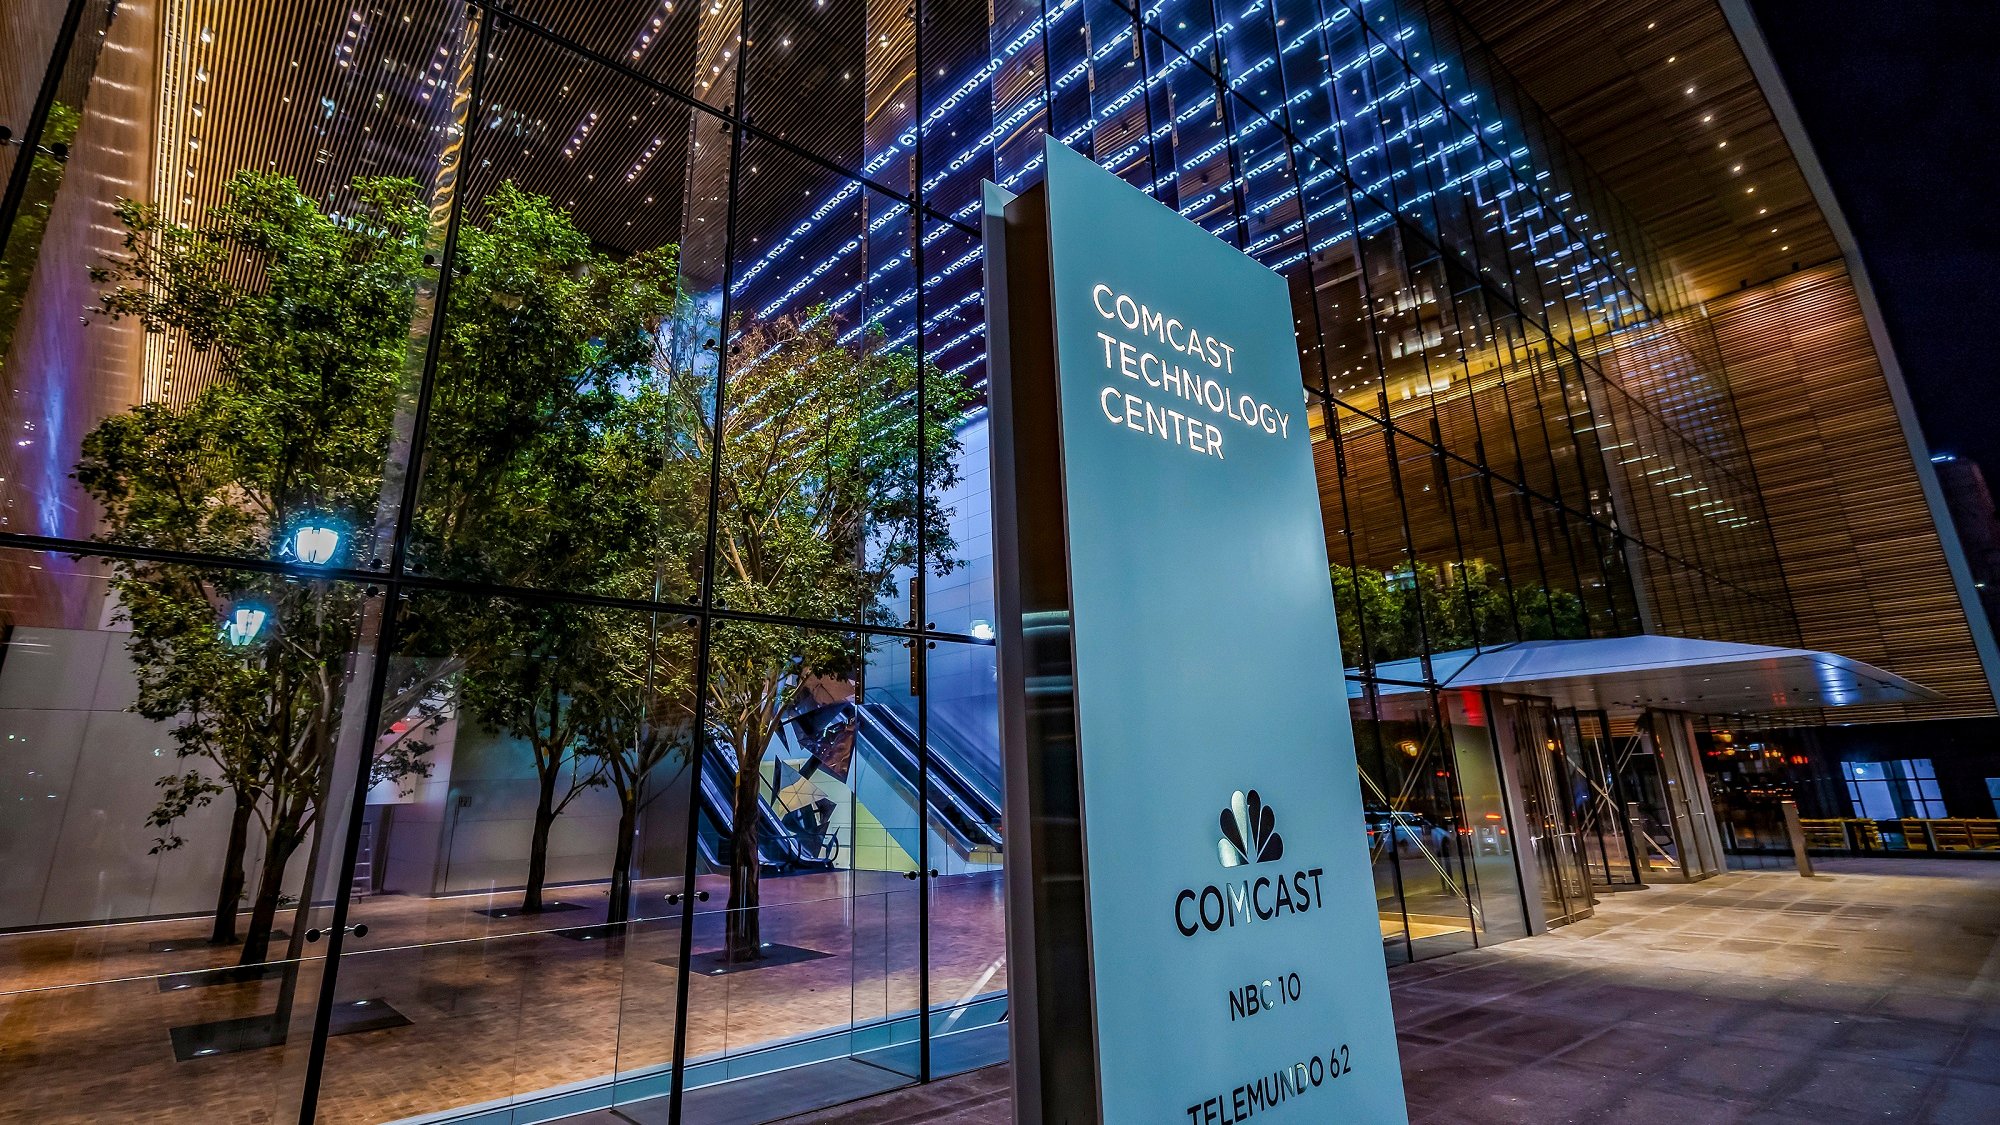 Comcast Technology Center sign